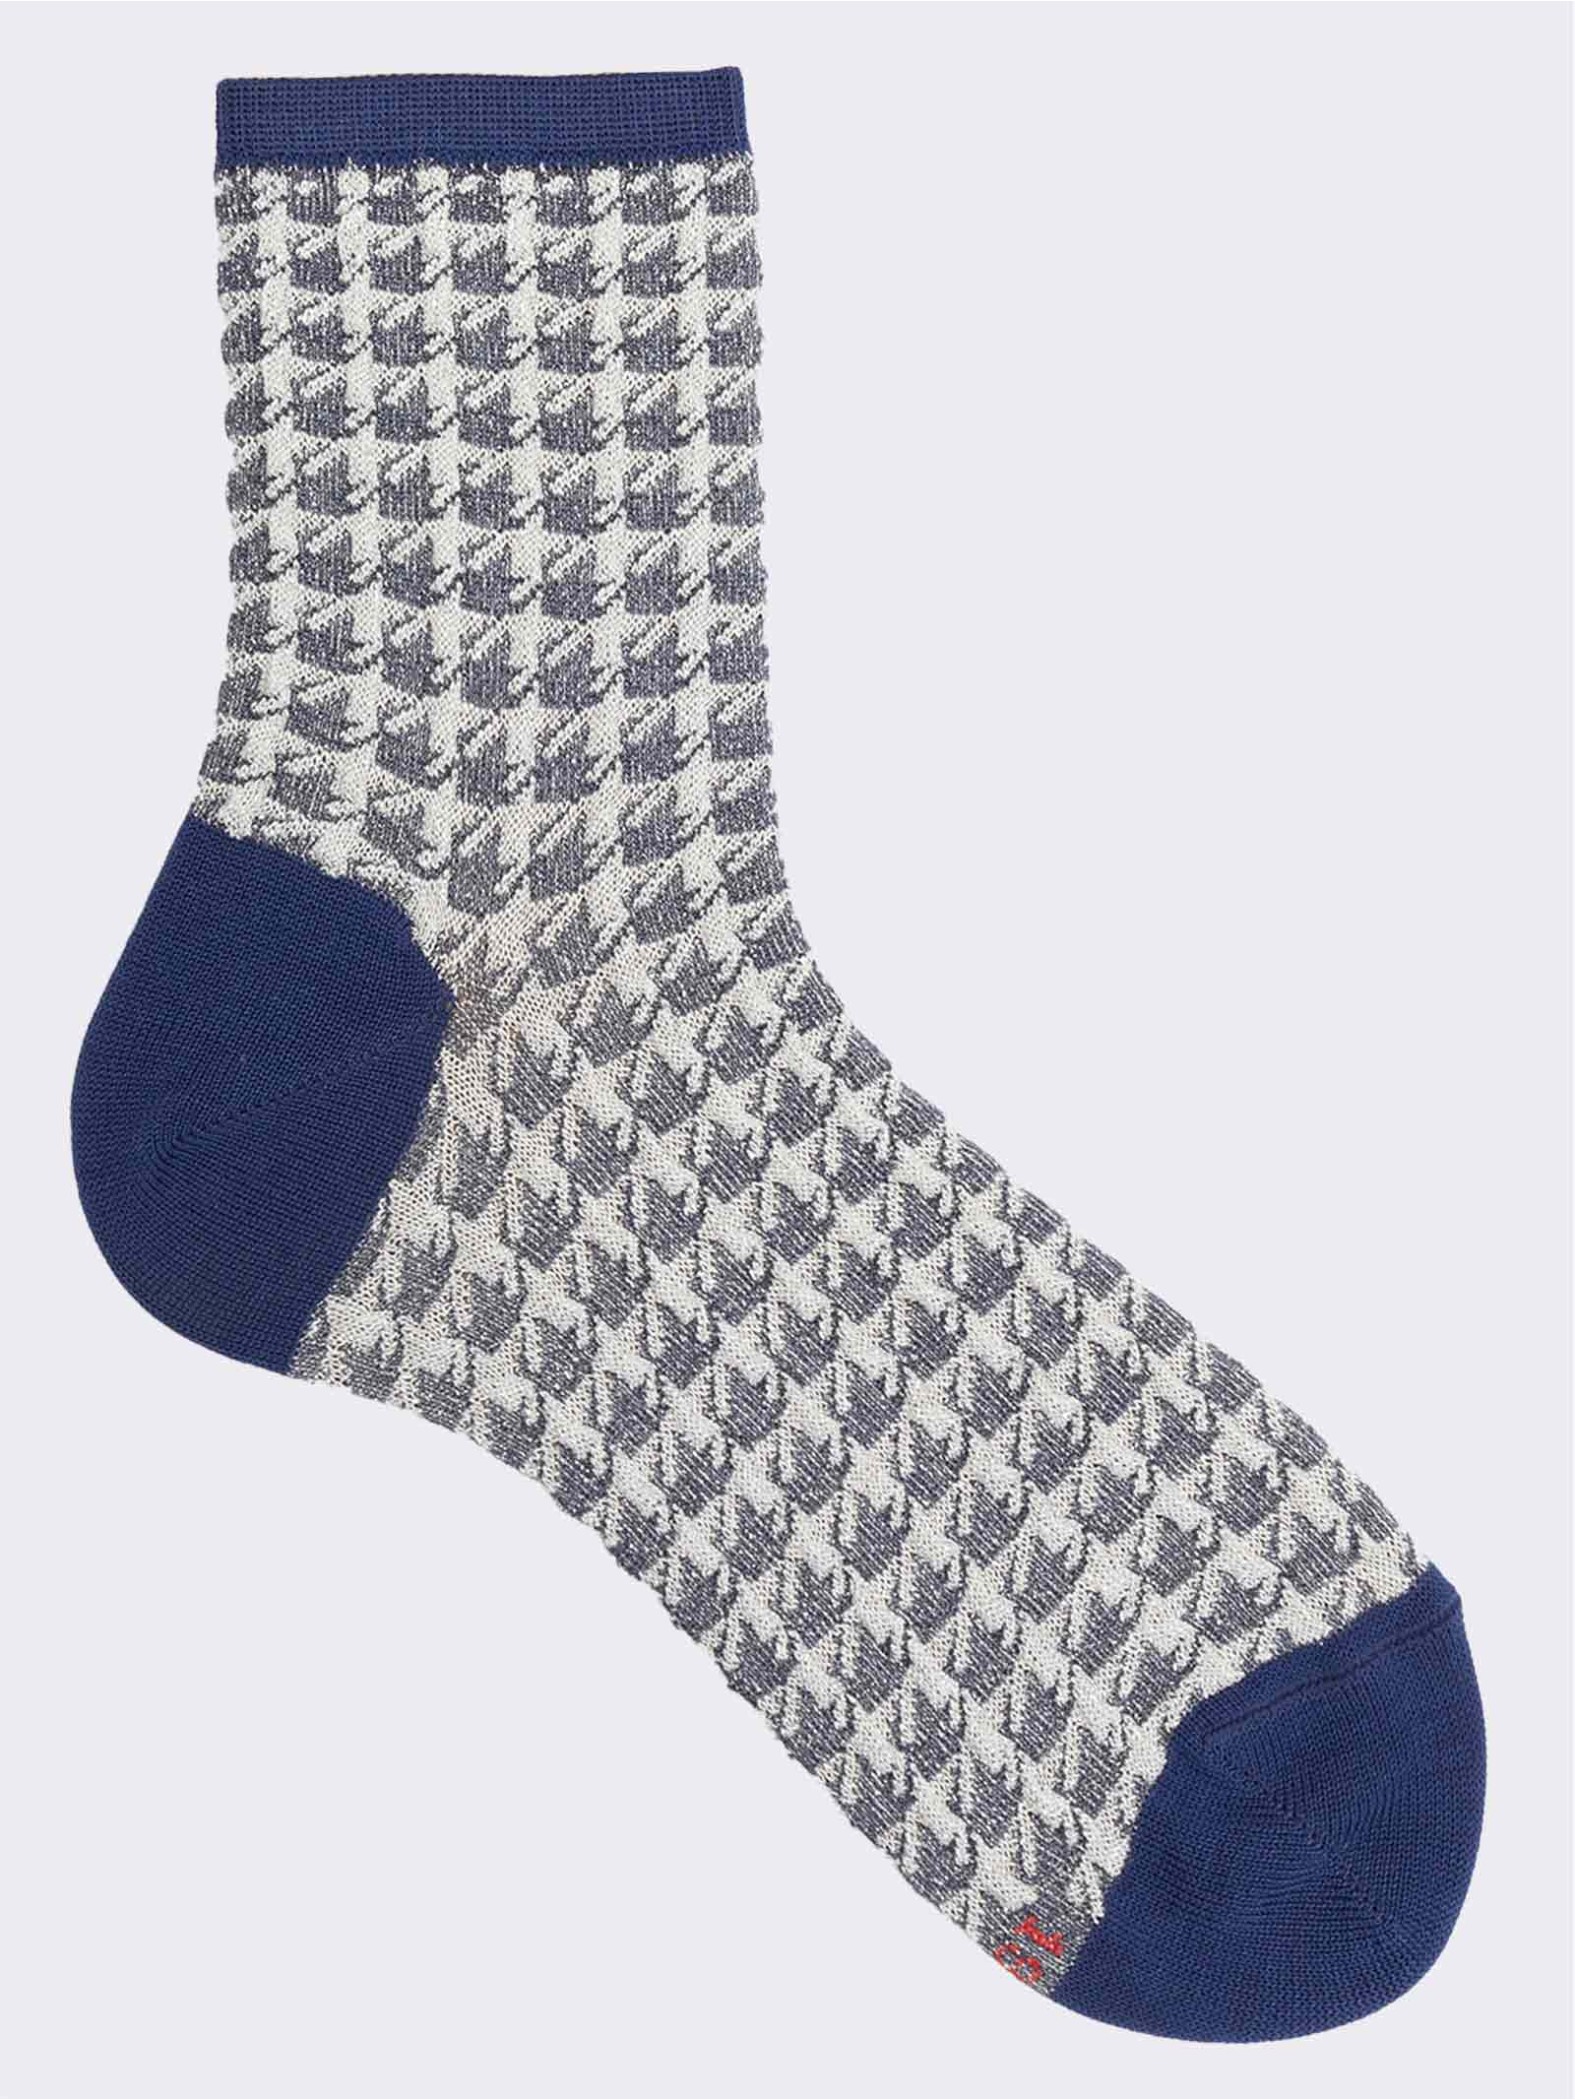 Crew socks with lurex Pied de Poule pattern